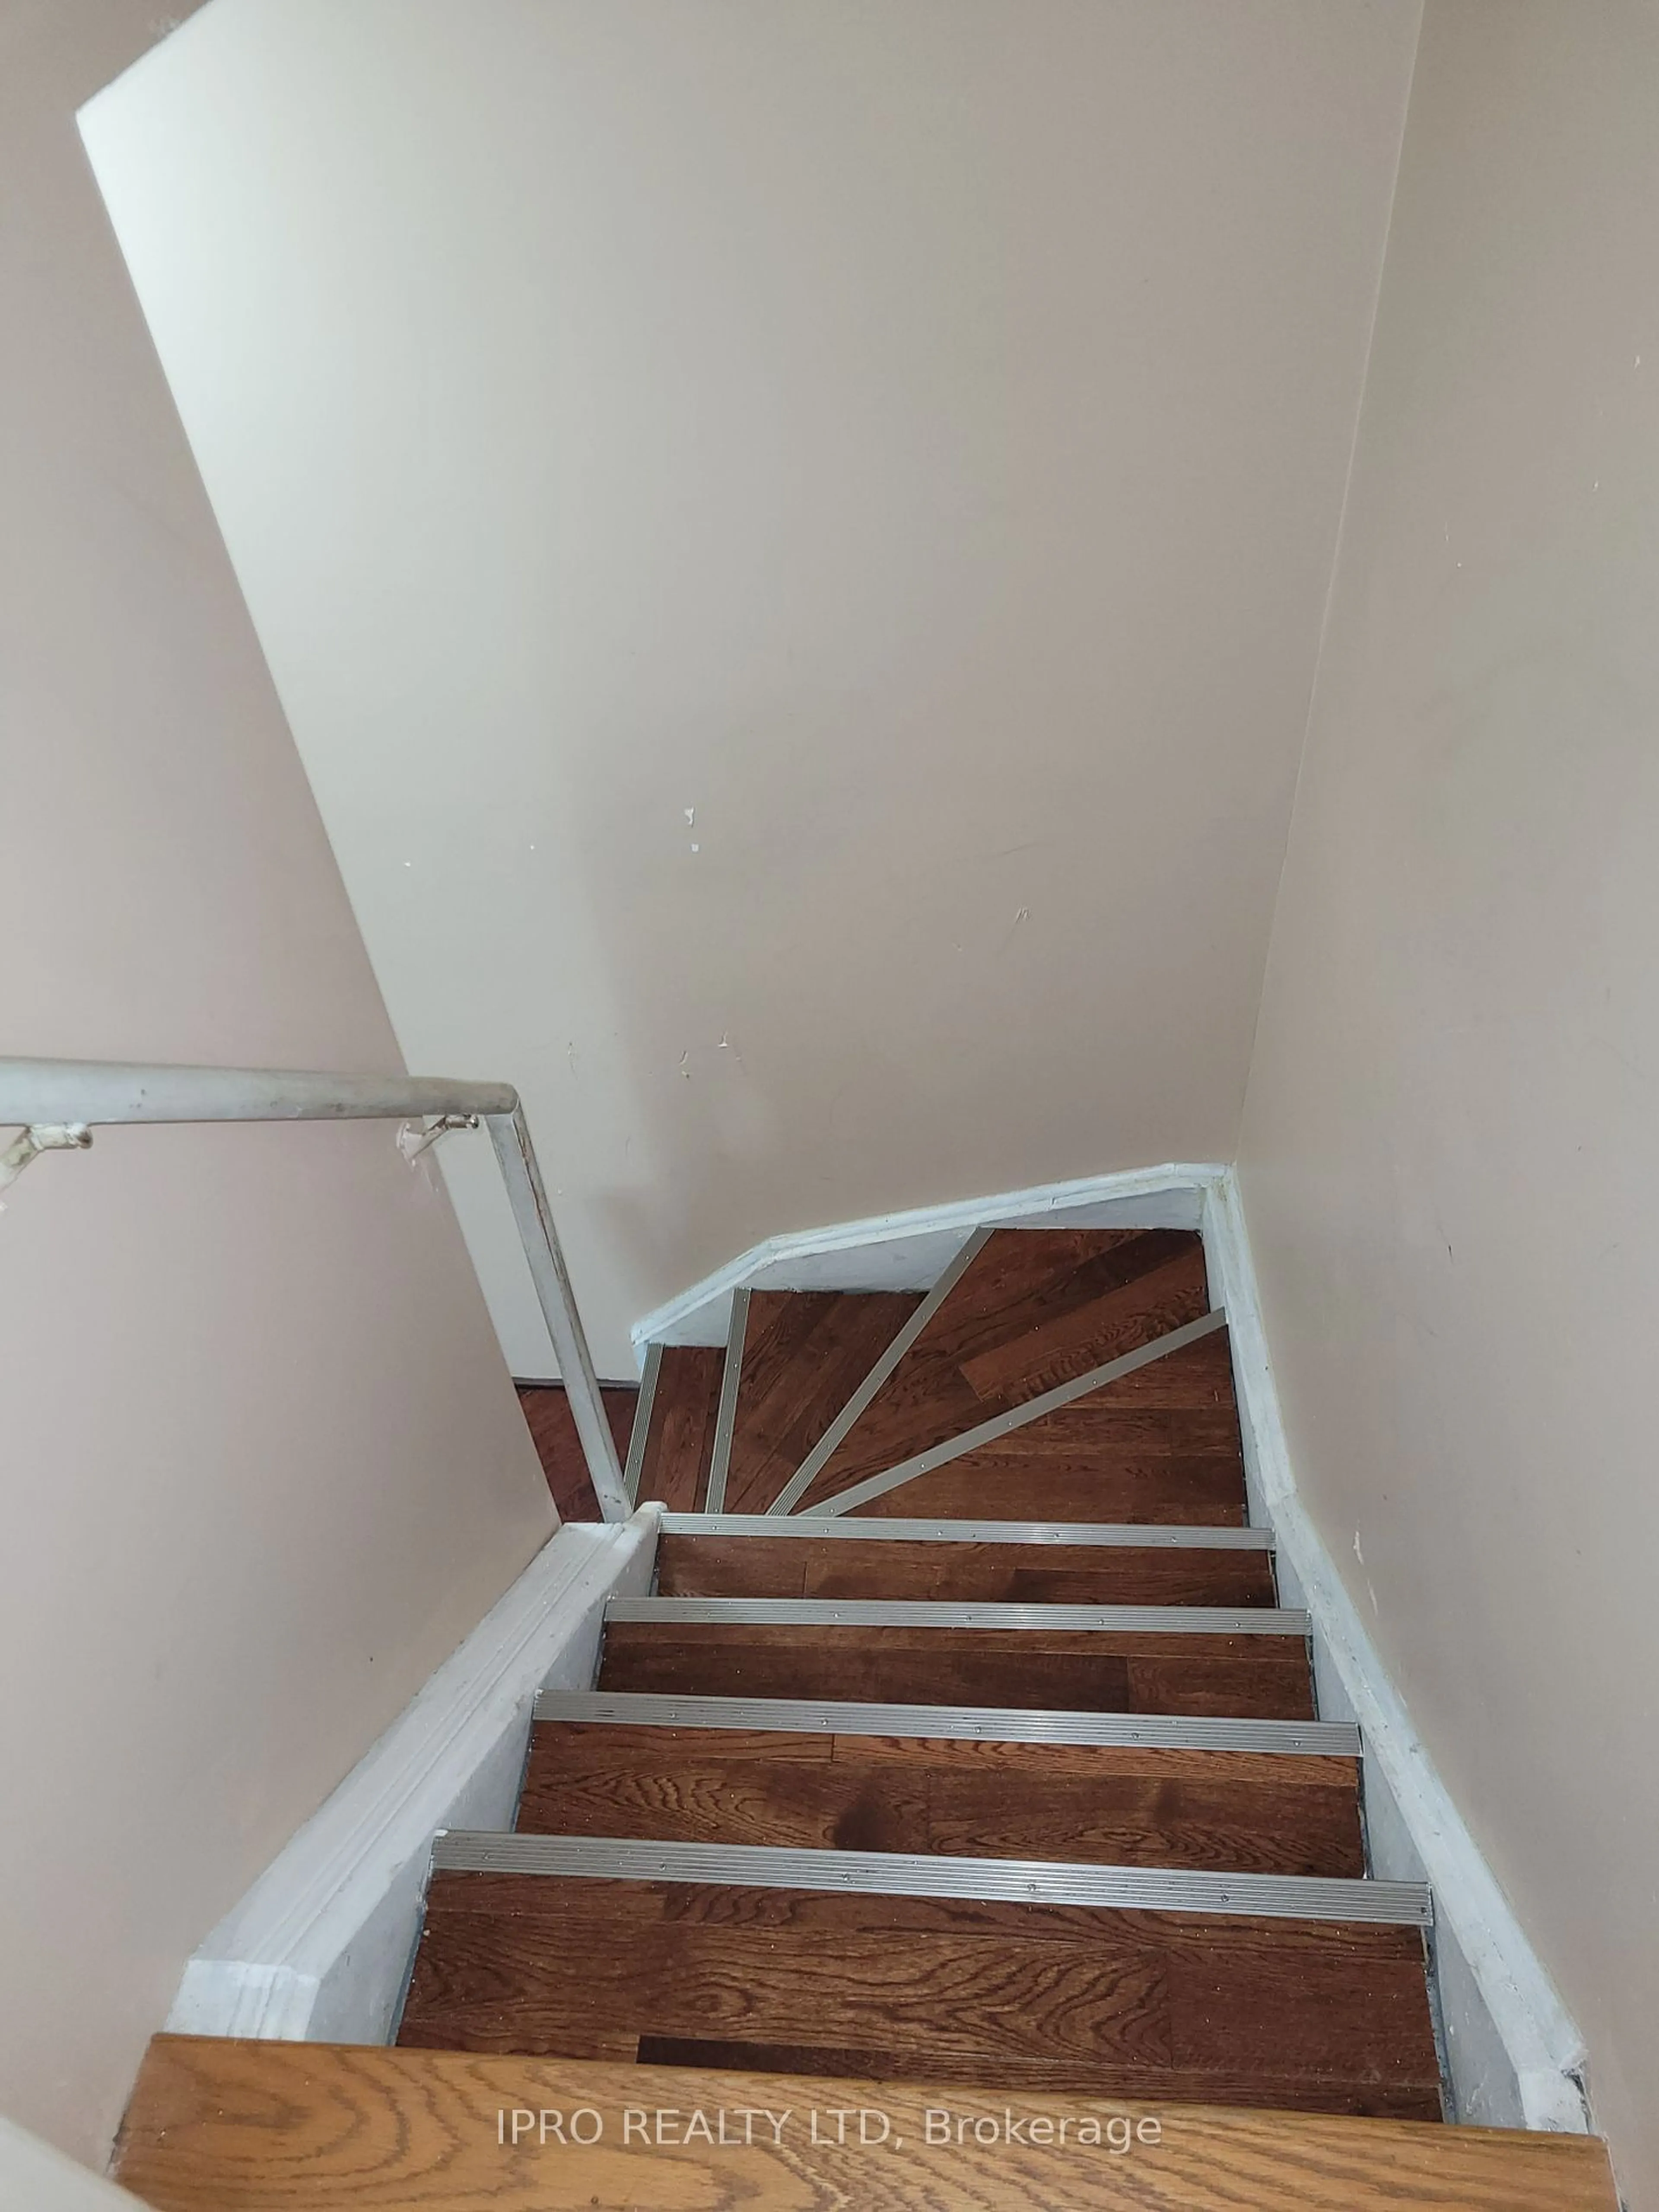 Stairs for 211 Provincial Pl, Brampton Ontario L6S 6C1